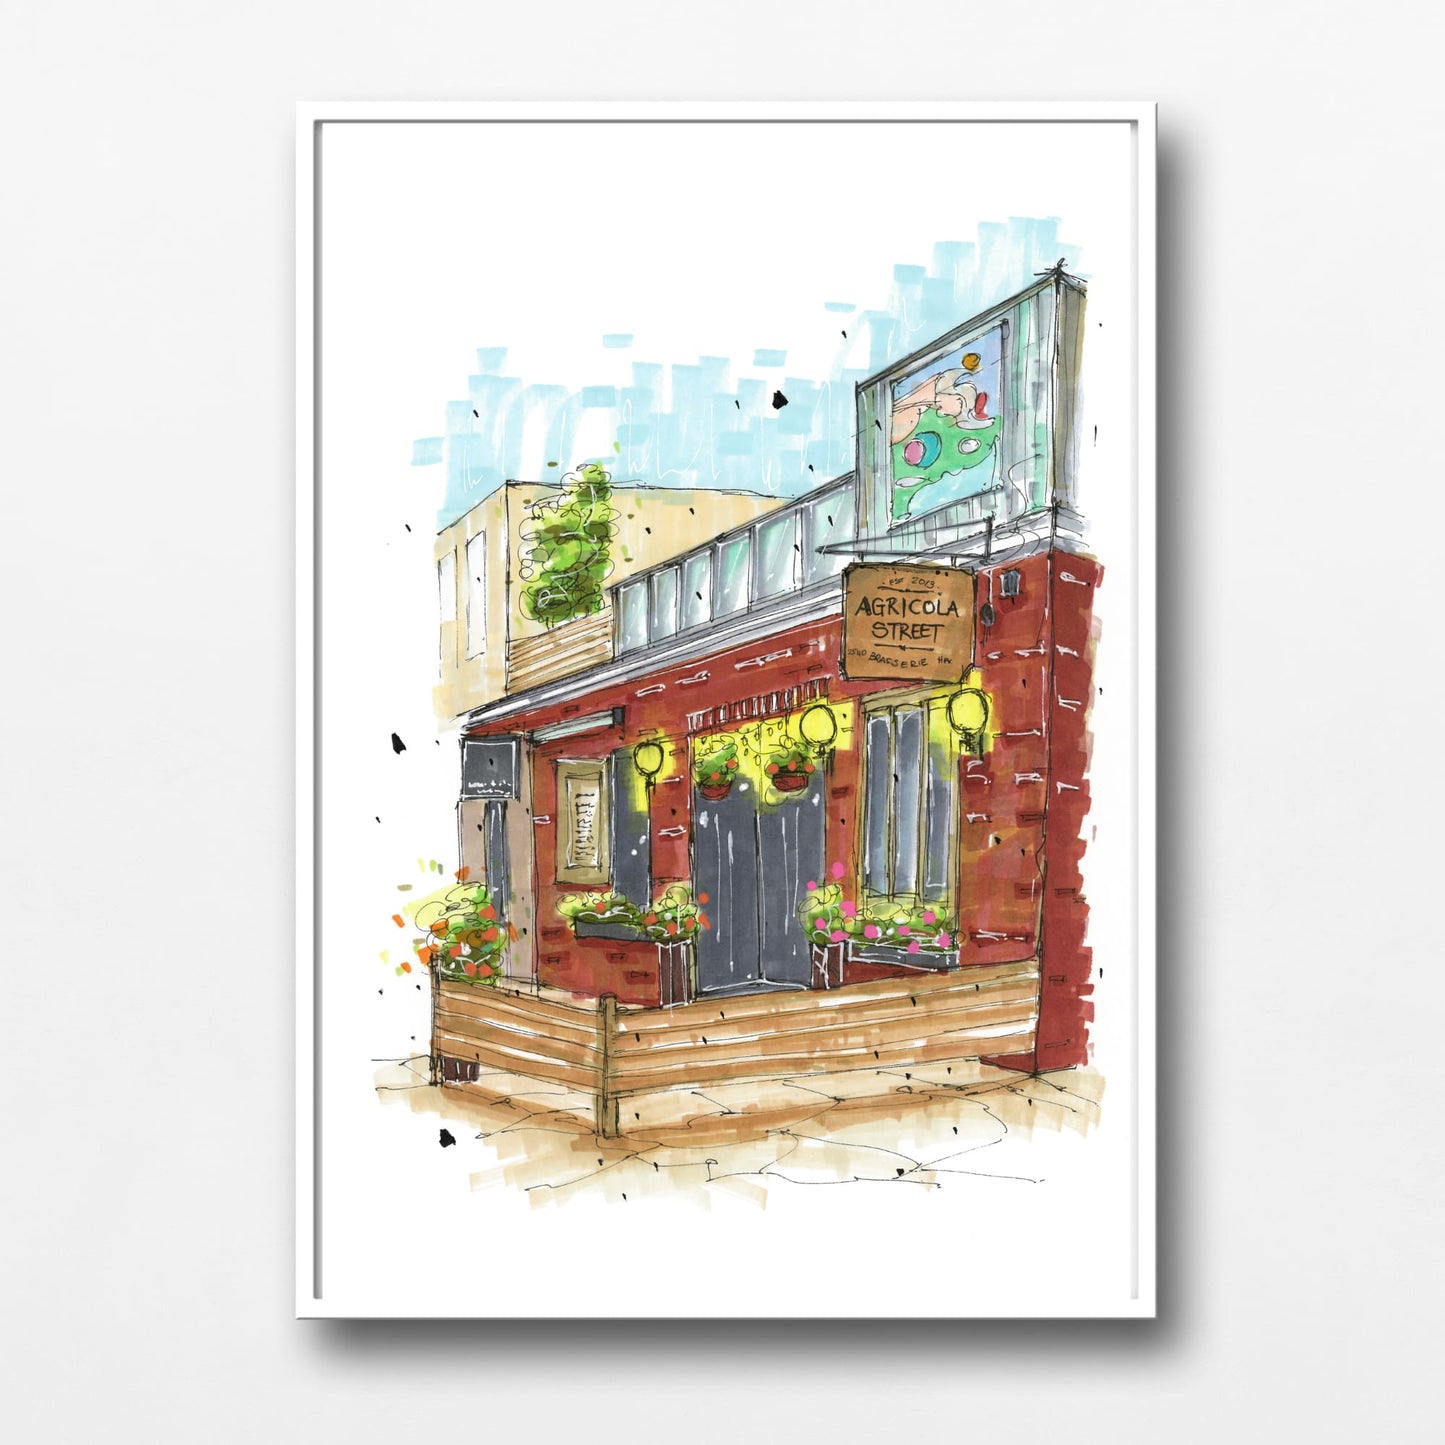 DTS0101 - Agricola Street Brasserie, Print, Downtownsketcher, Wynand van Niekerk, DTS0087